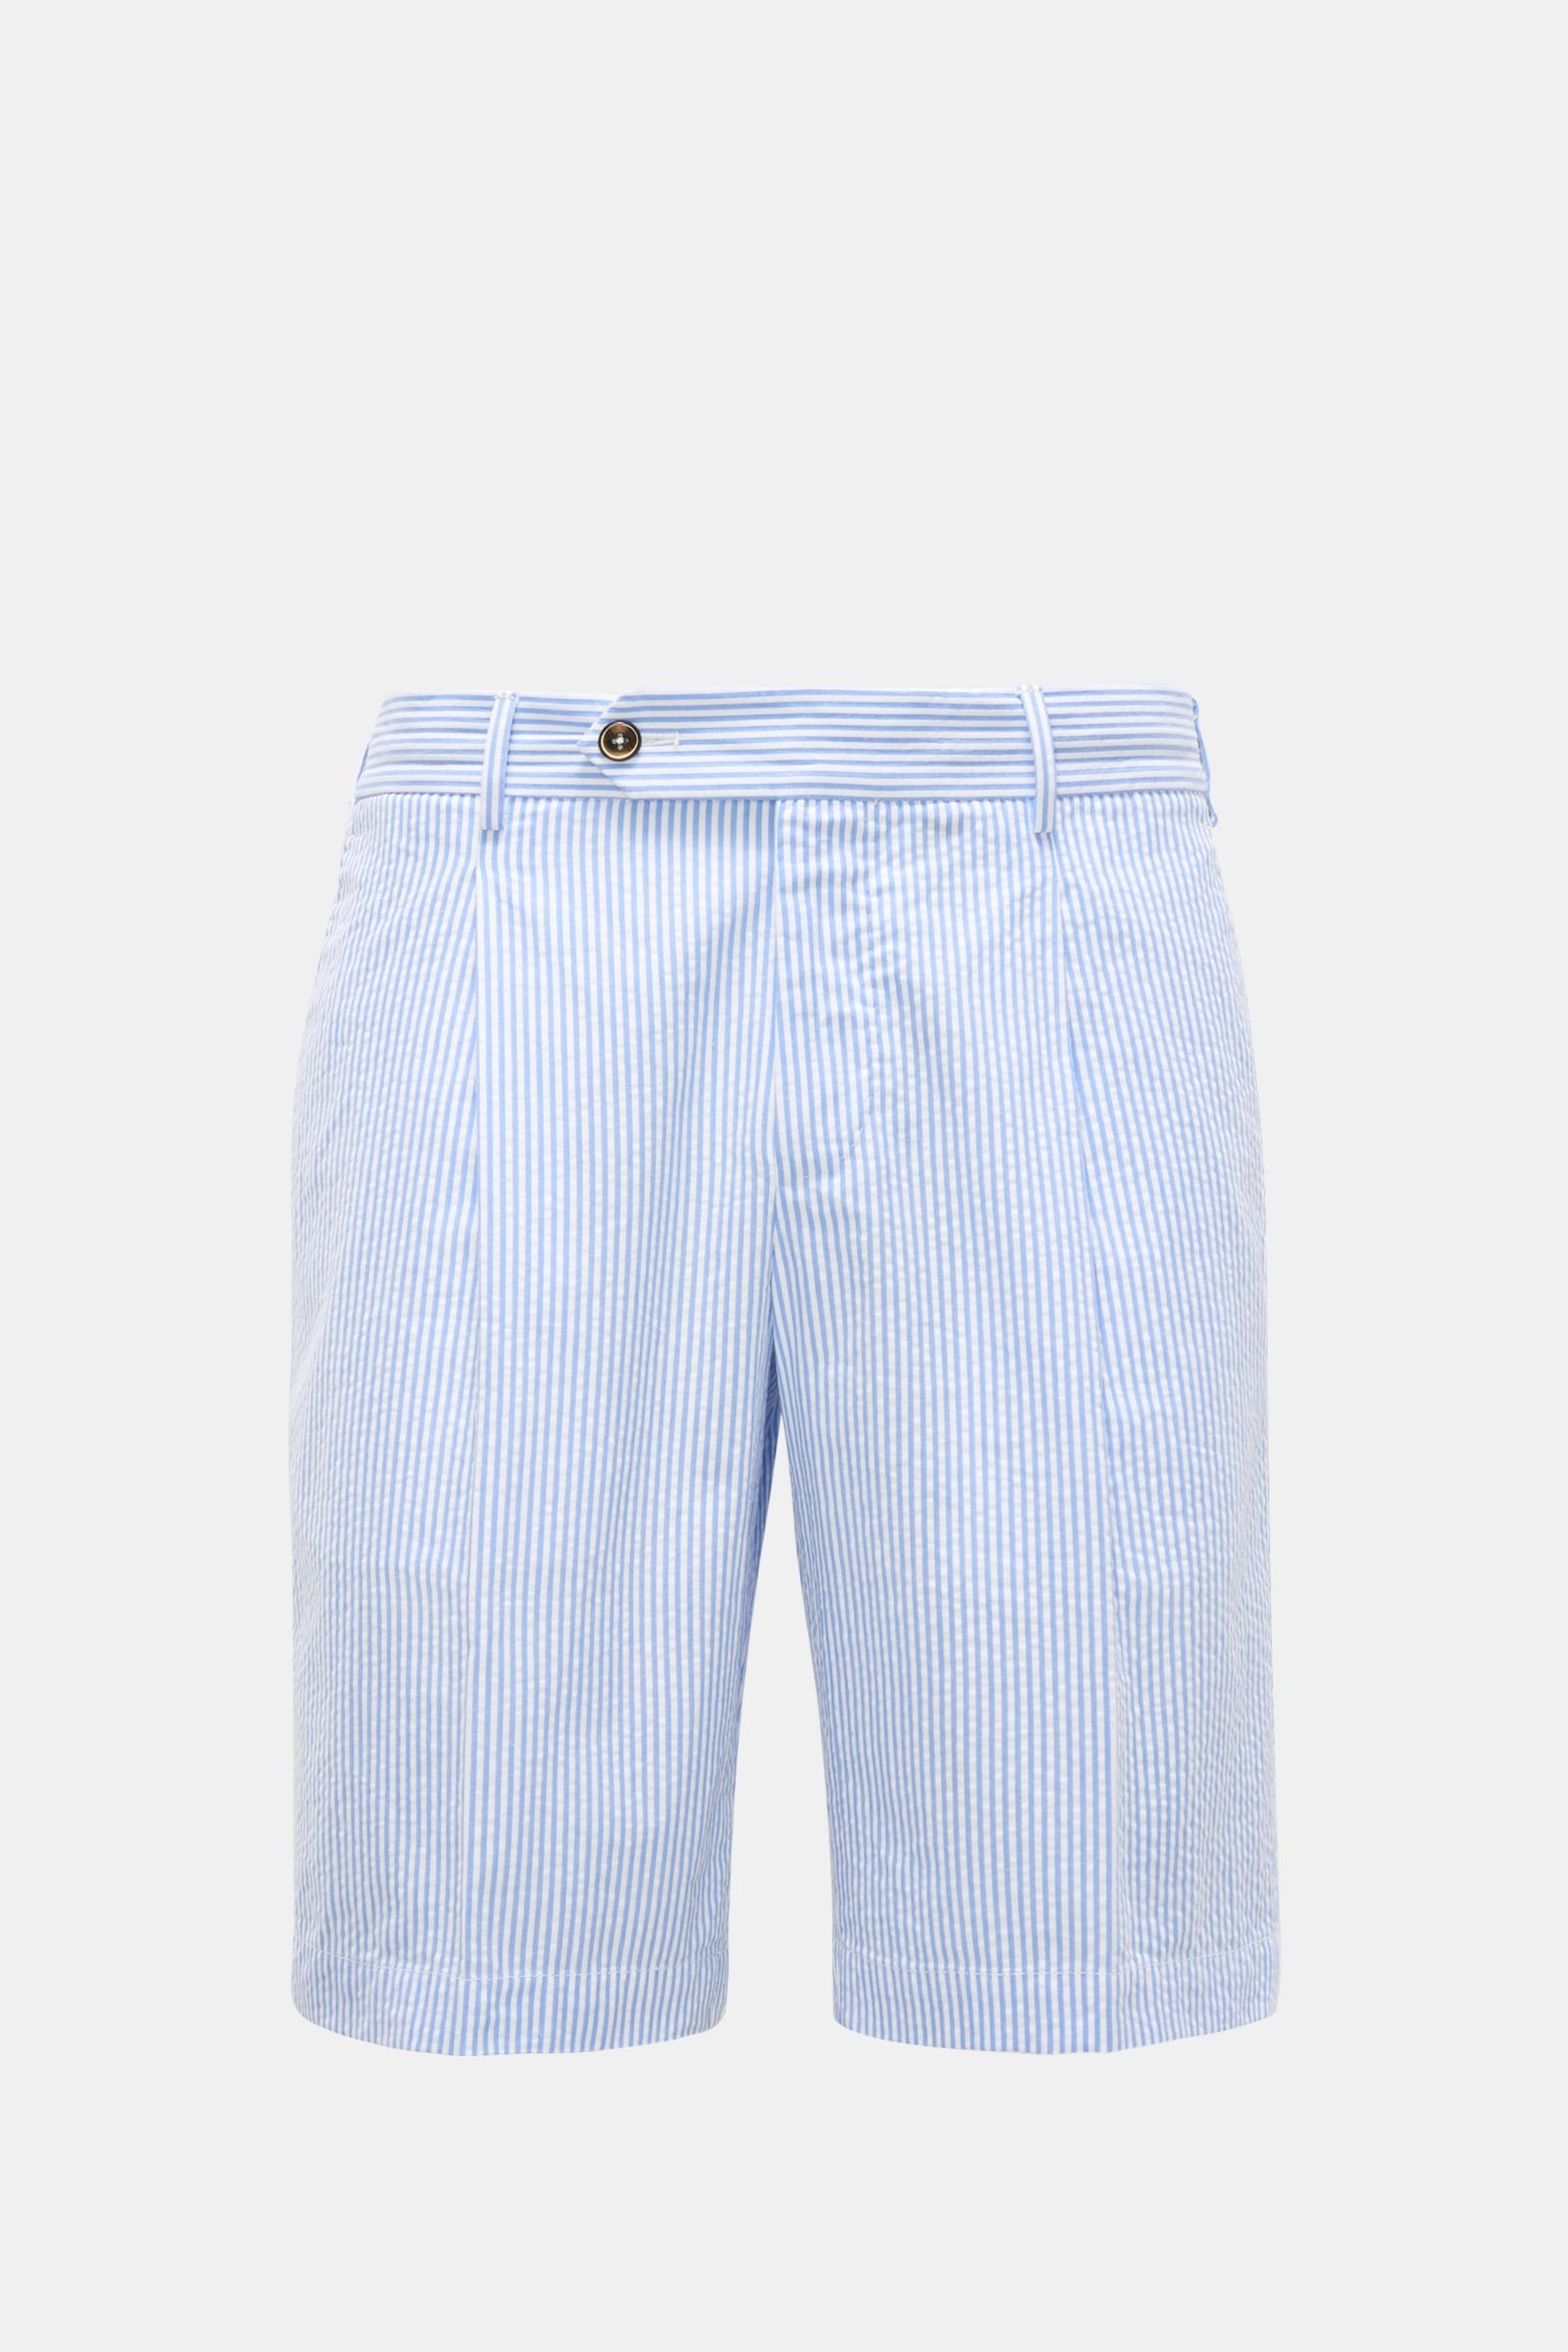 Seersucker Bermuda shorts light blue/white striped